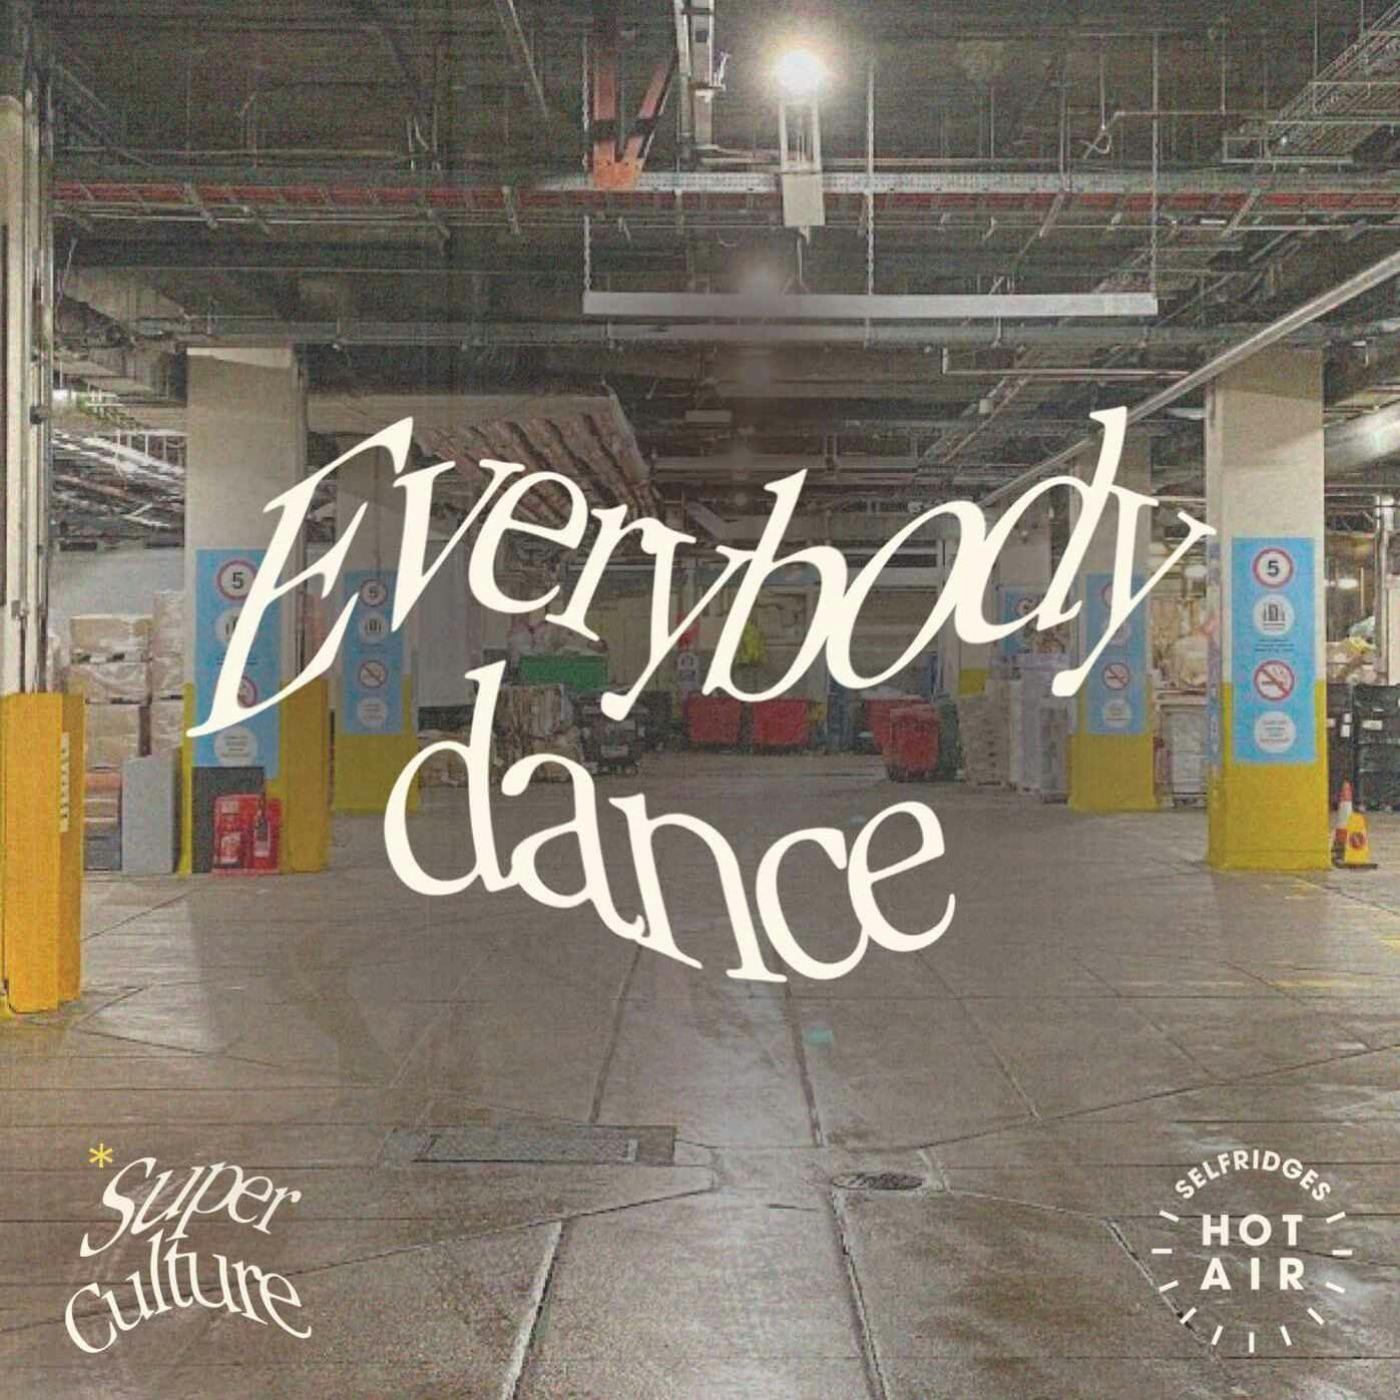 Super Culture: Everybody dance